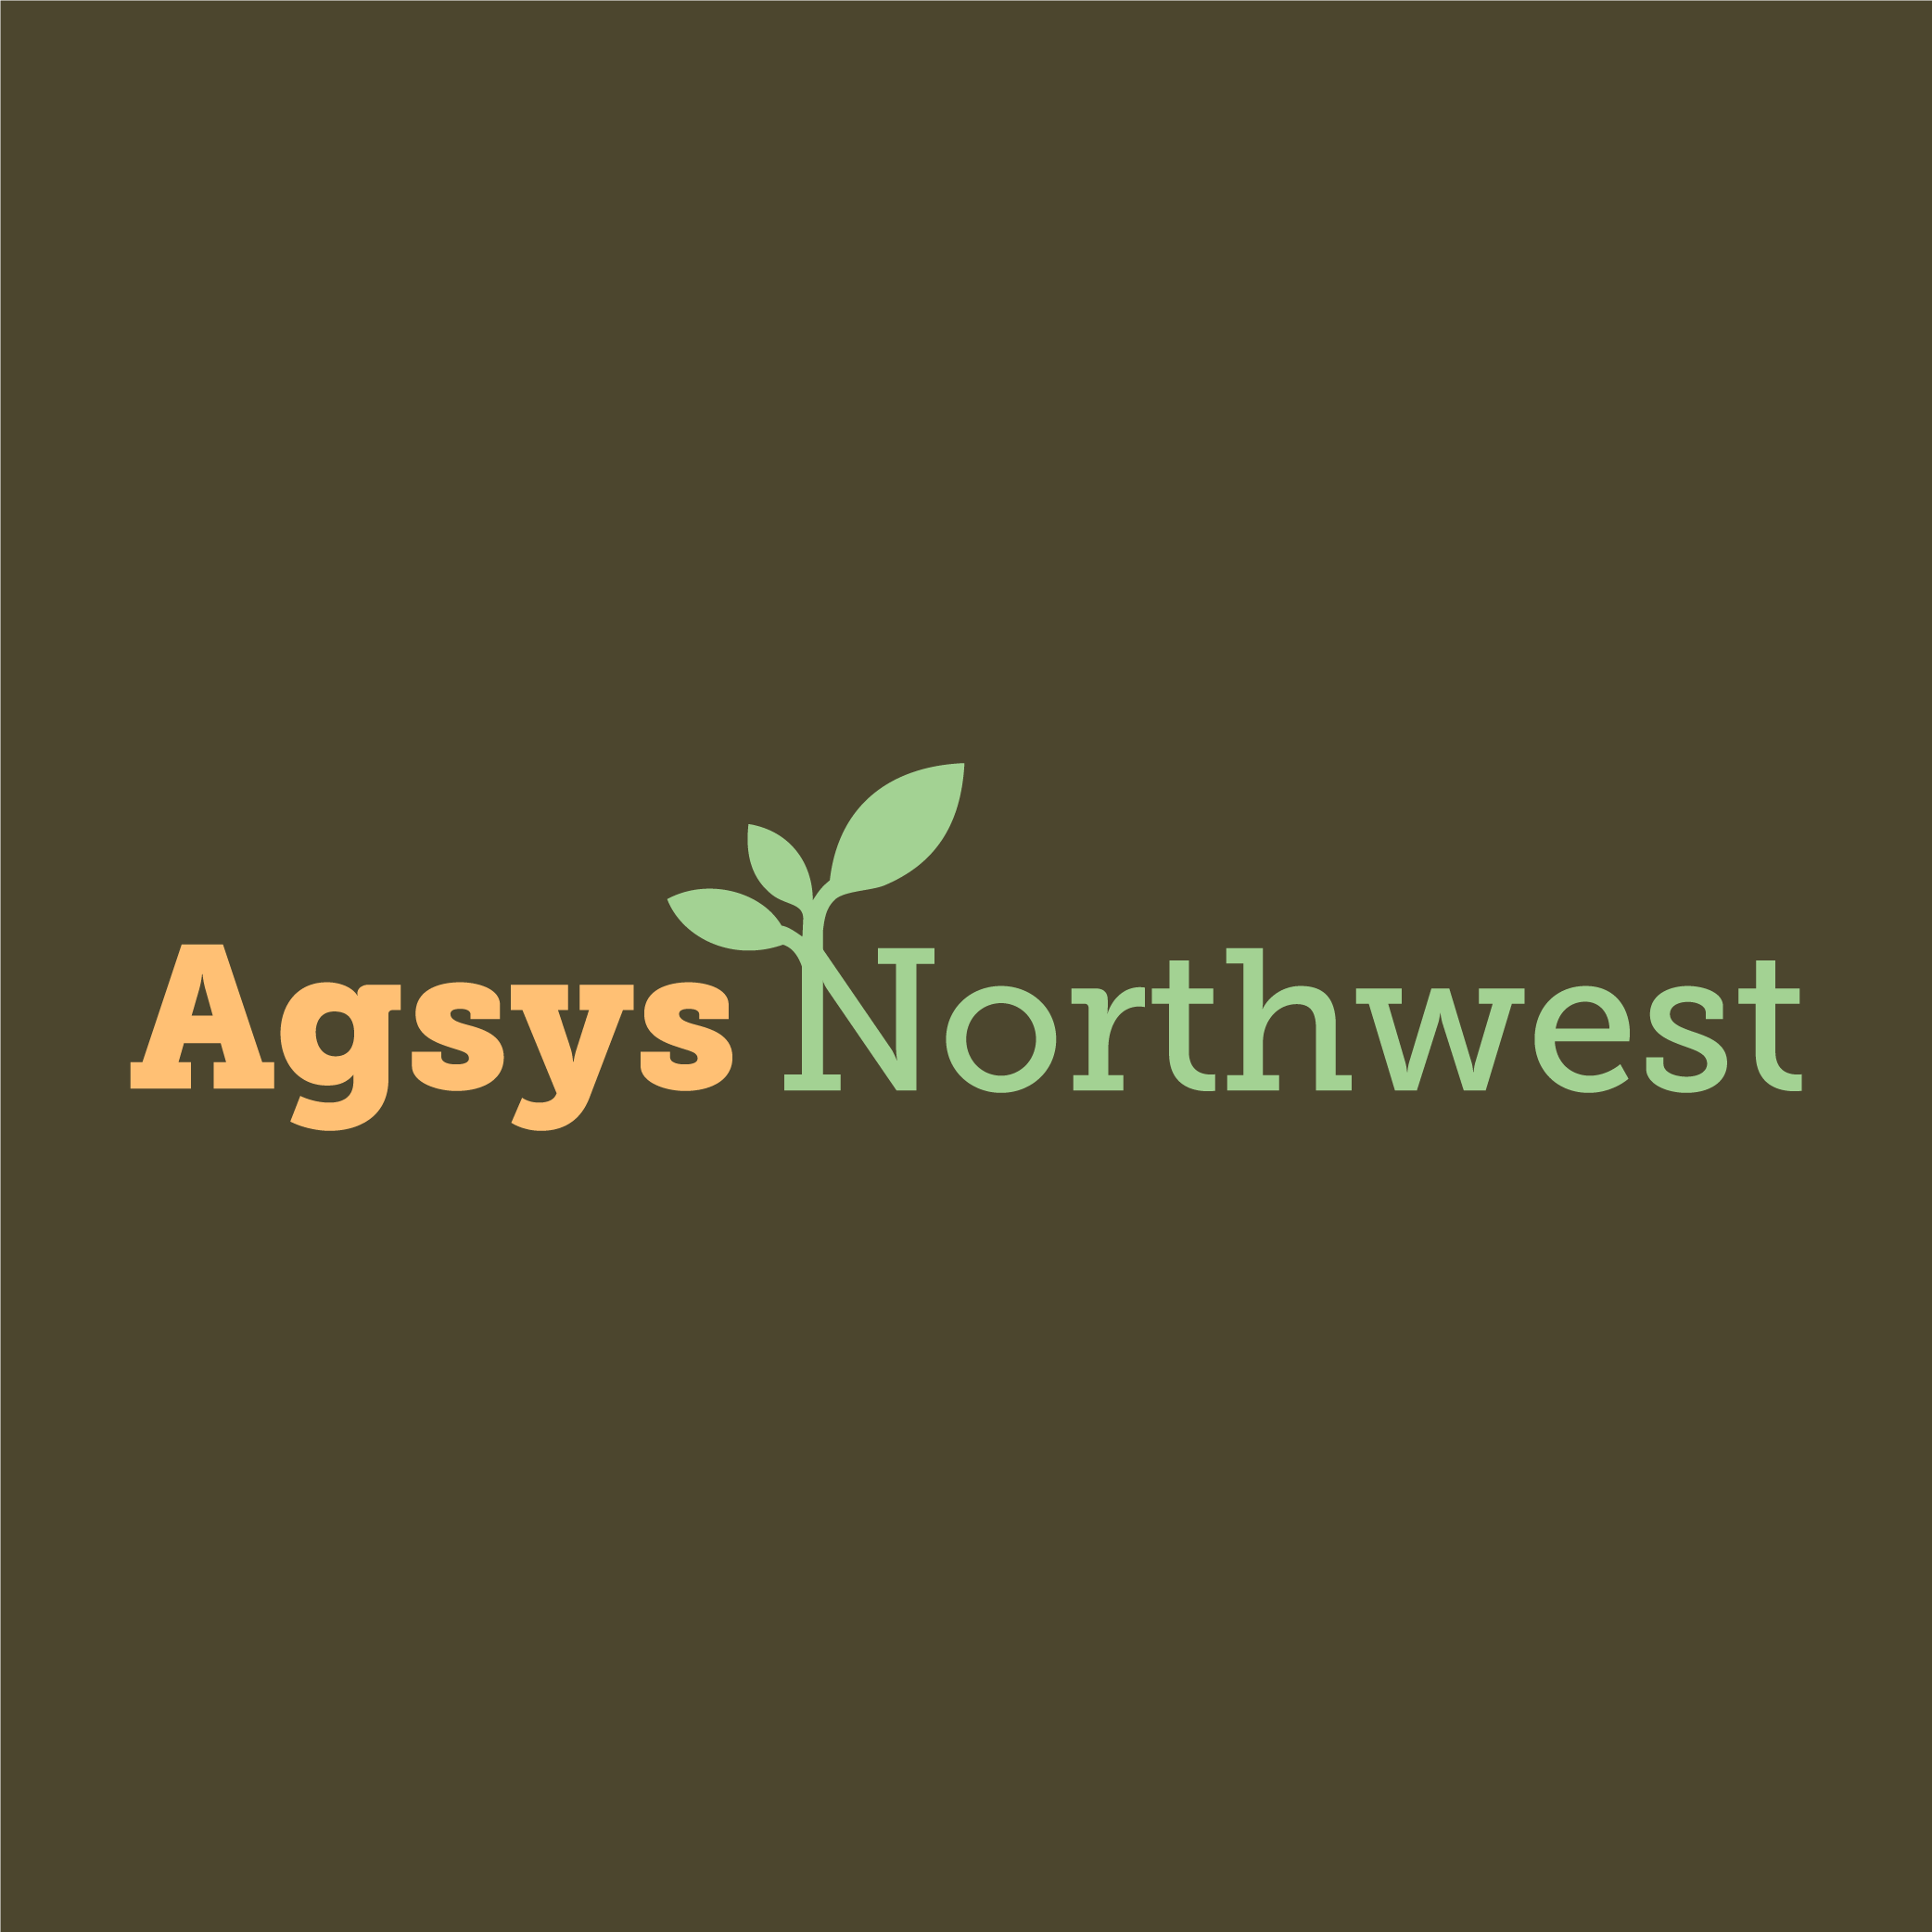 Agsys Northwest